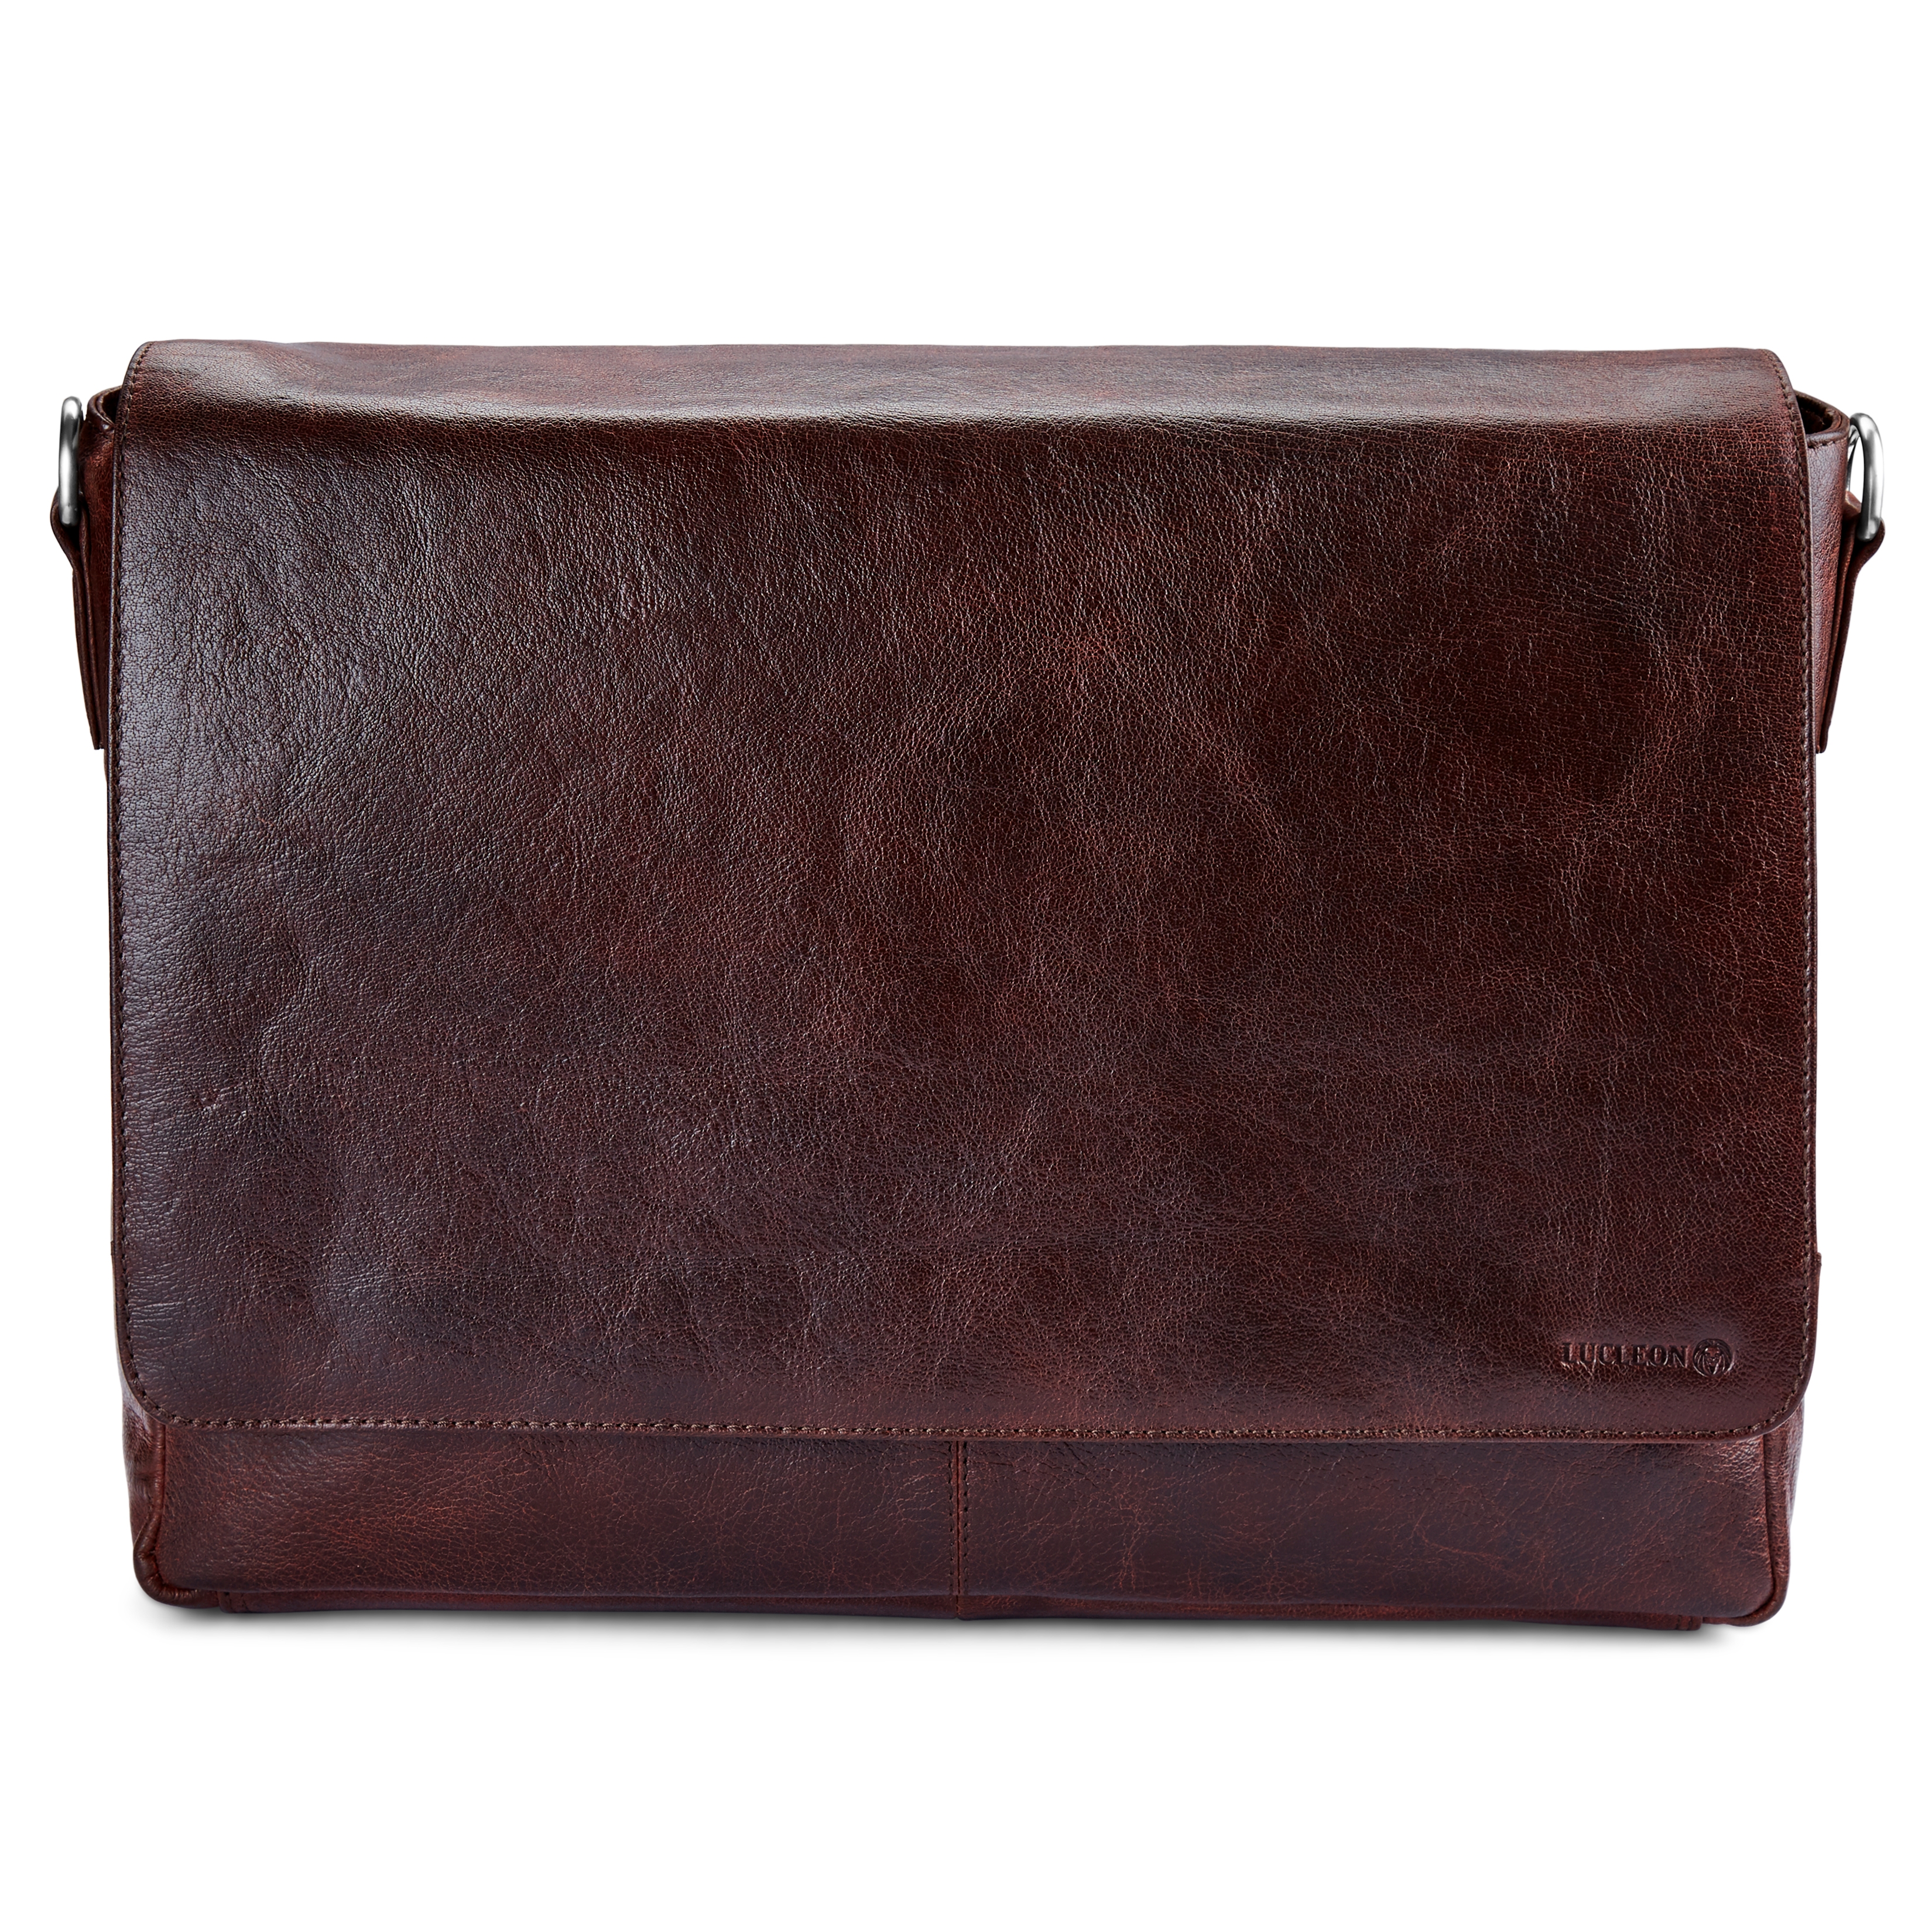 Leather Hand Pouch Men Purse Wallet Clutch Wrist Bag – Rustic Town